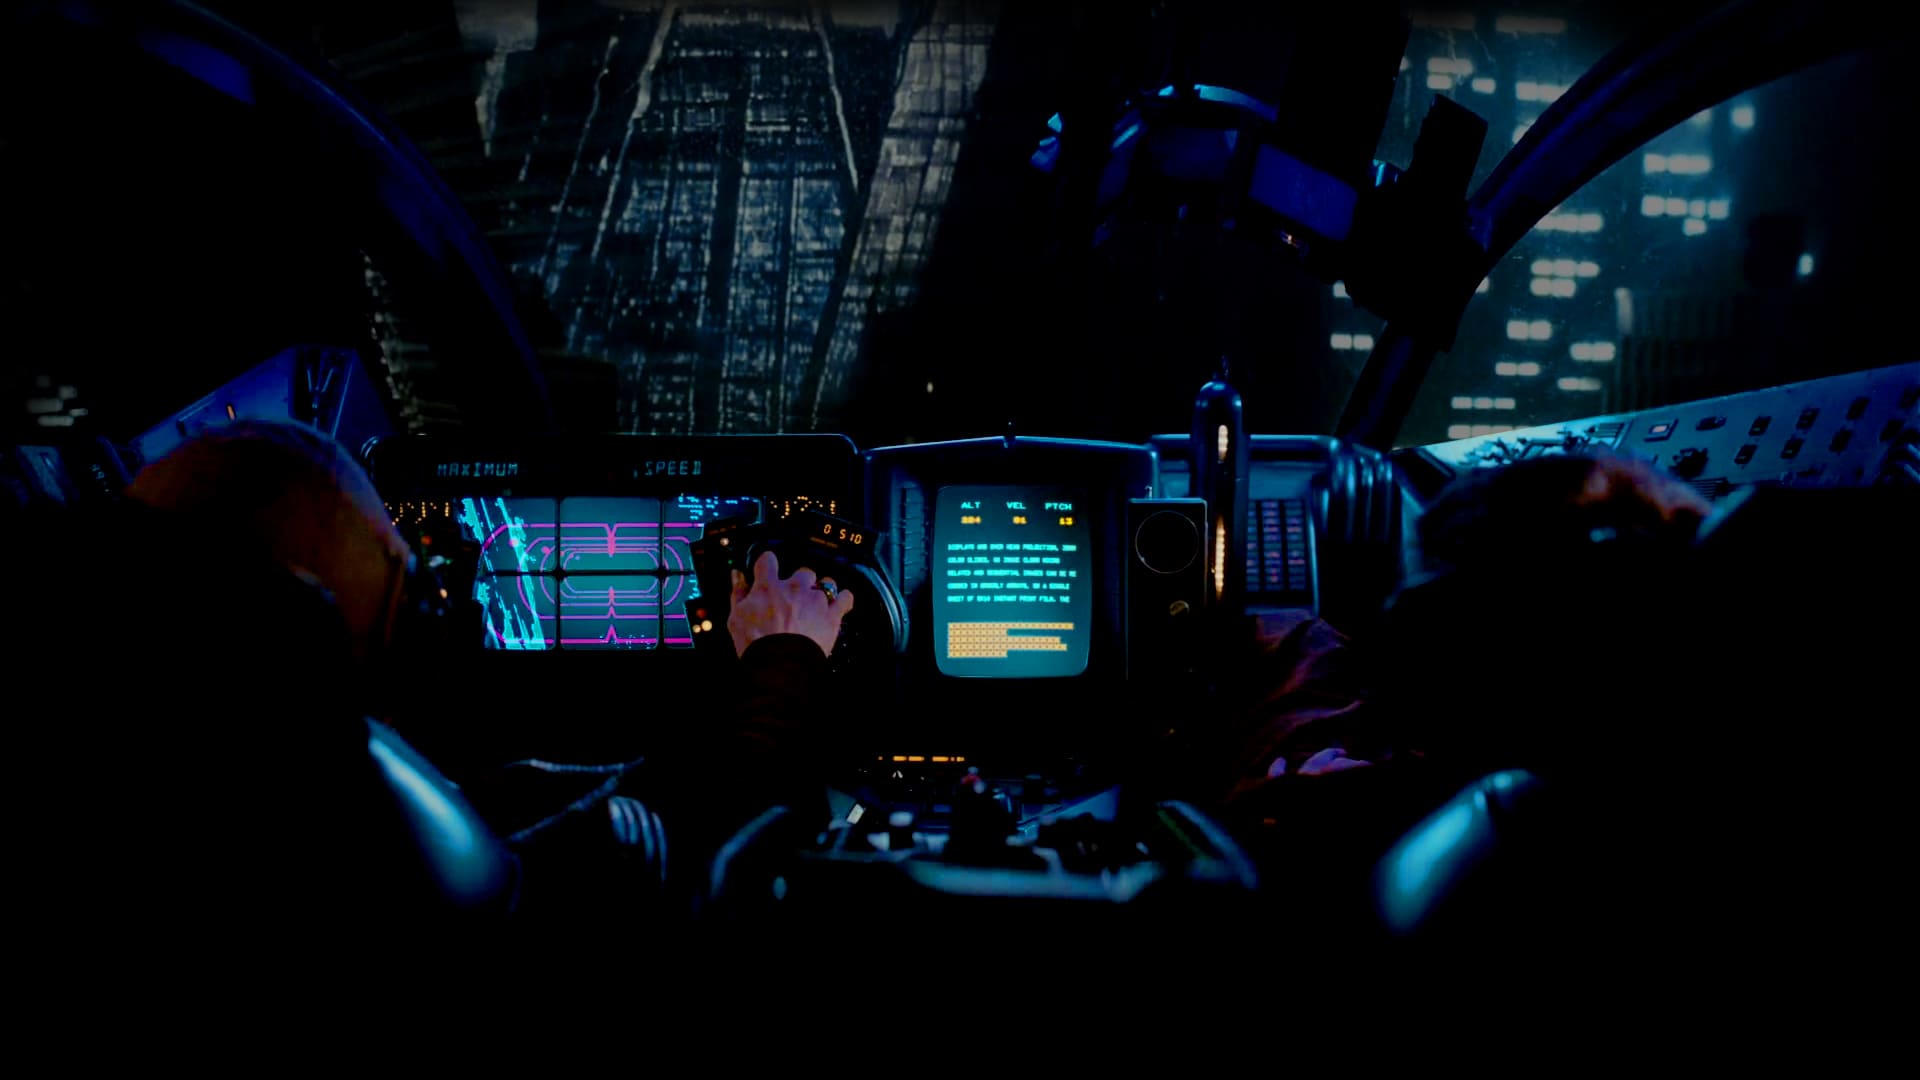 Futuristic cockpit